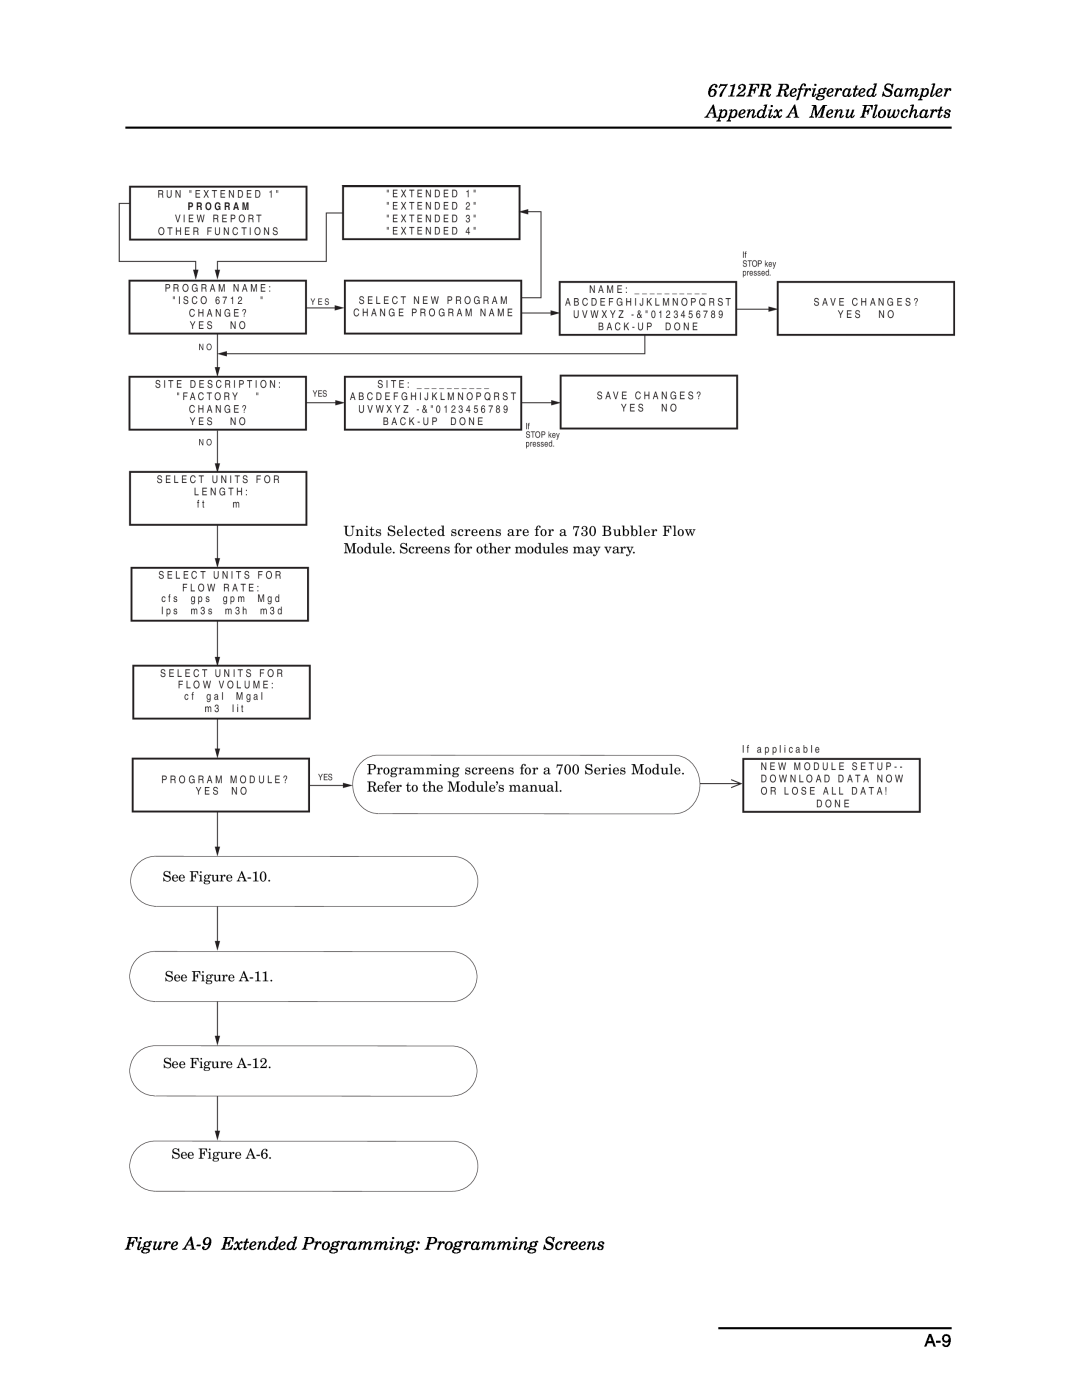 Teledyne 6712FR Refrigerated Sampler Appendix A Menu Flowcharts, Figure A-9 Extended Programming Programming Screens 